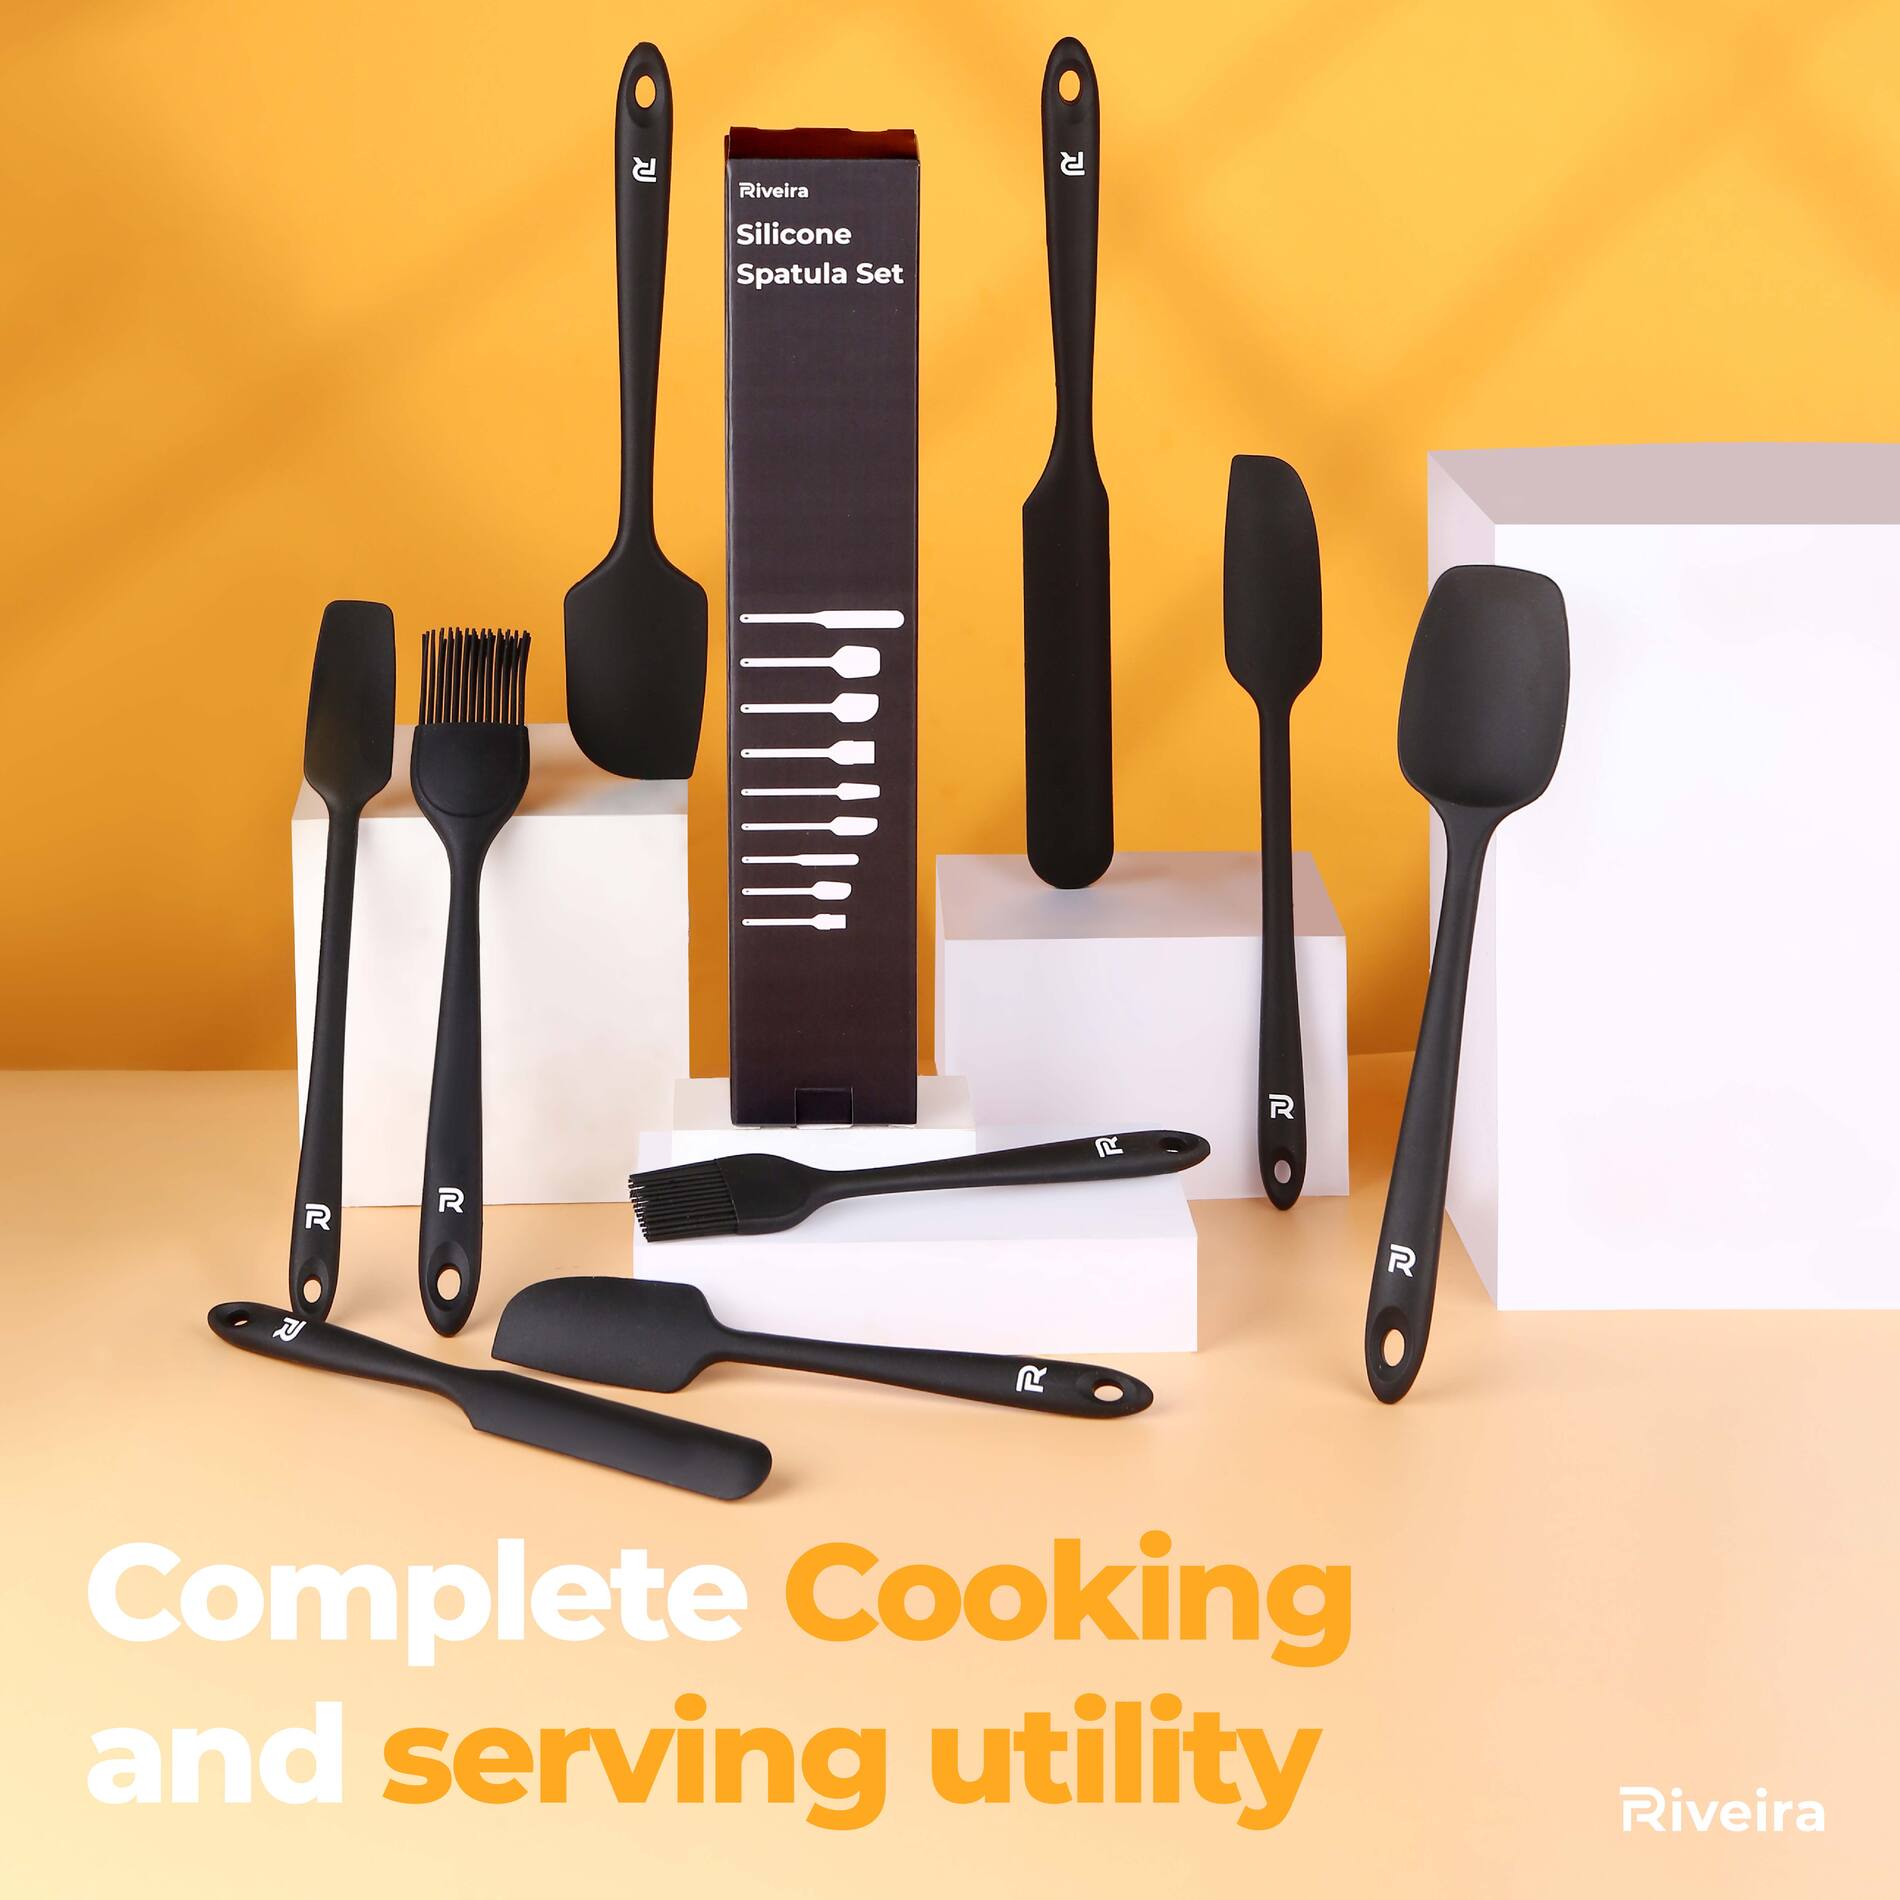 Riveira Silicone Spatula Set 4-Piece 600°F+ Heat Resistant kitchen utensils  set Cooking Utensils Set…See more Riveira Silicone Spatula Set 4-Piece